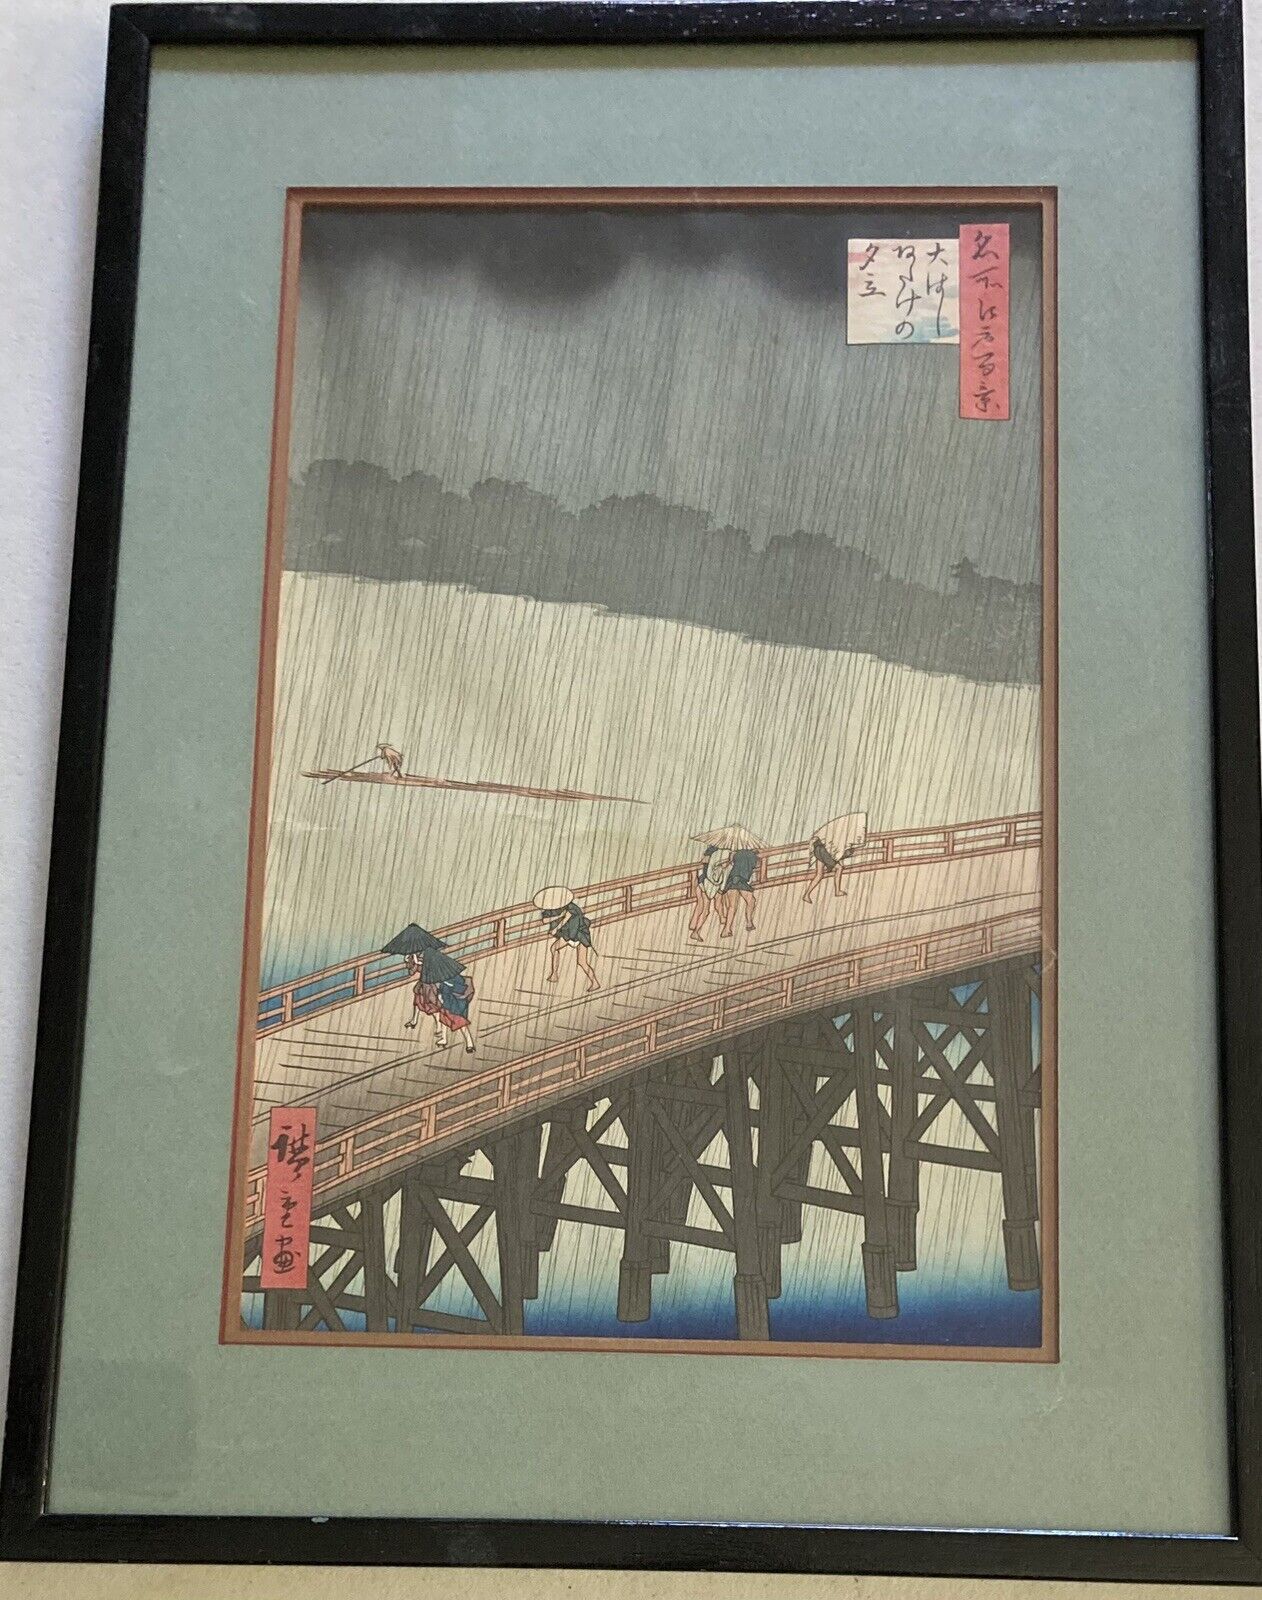 Sale $99 Ando Hiroshige Japanese Woodblock Print Sudden Shower at Ohashi Bridge